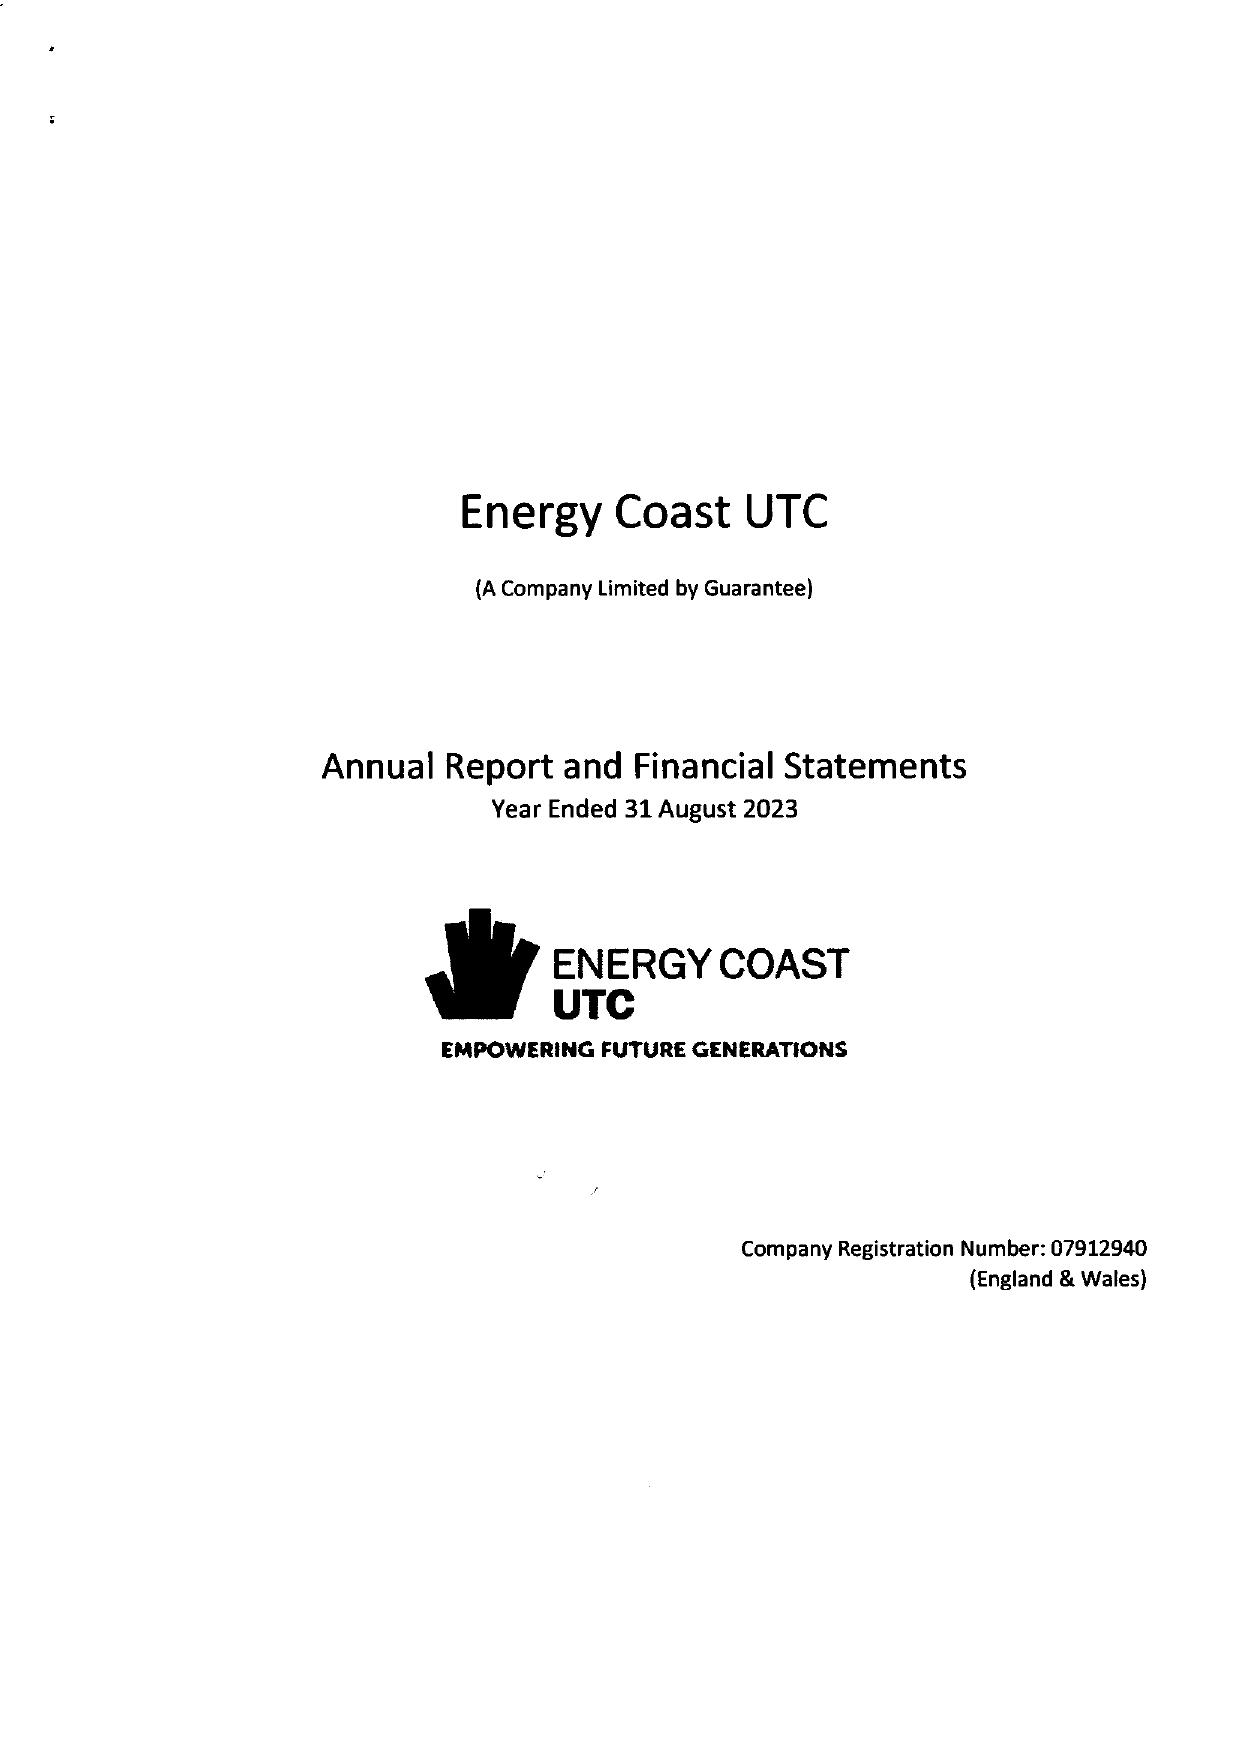 ENERGYCOASTUTC 2022 Annual Report